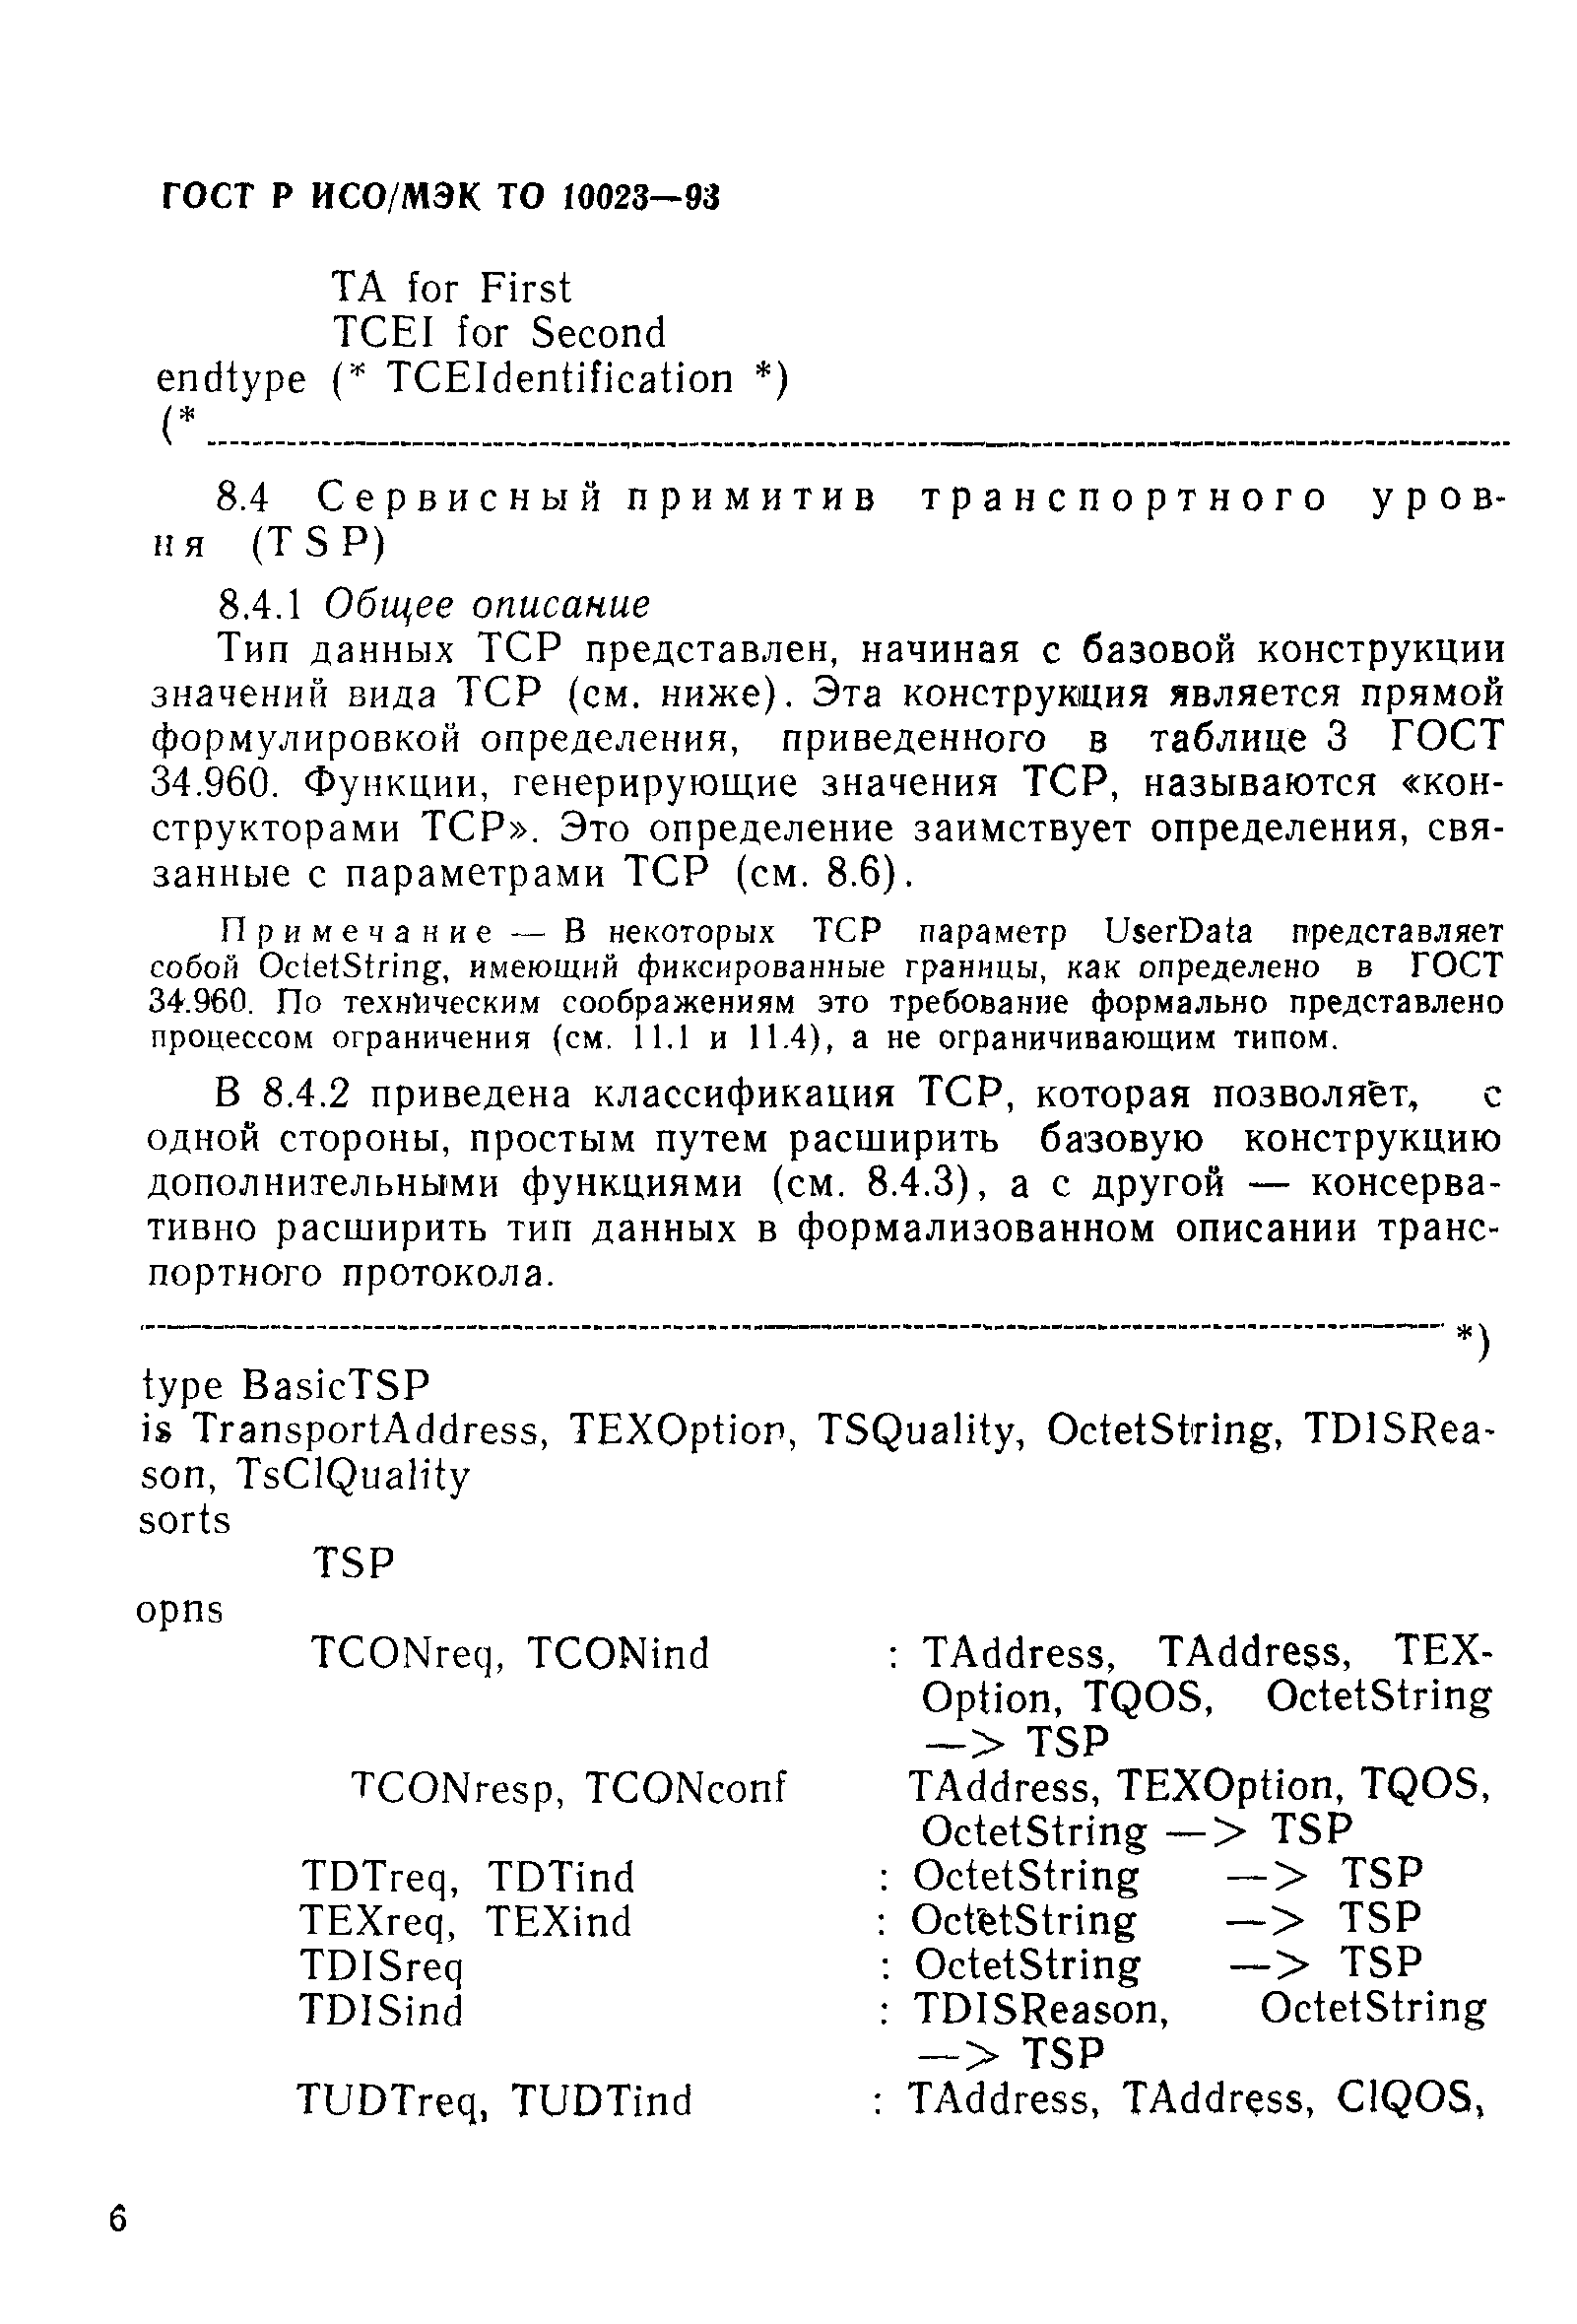 ГОСТ Р ИСО/МЭК ТО 10023-93